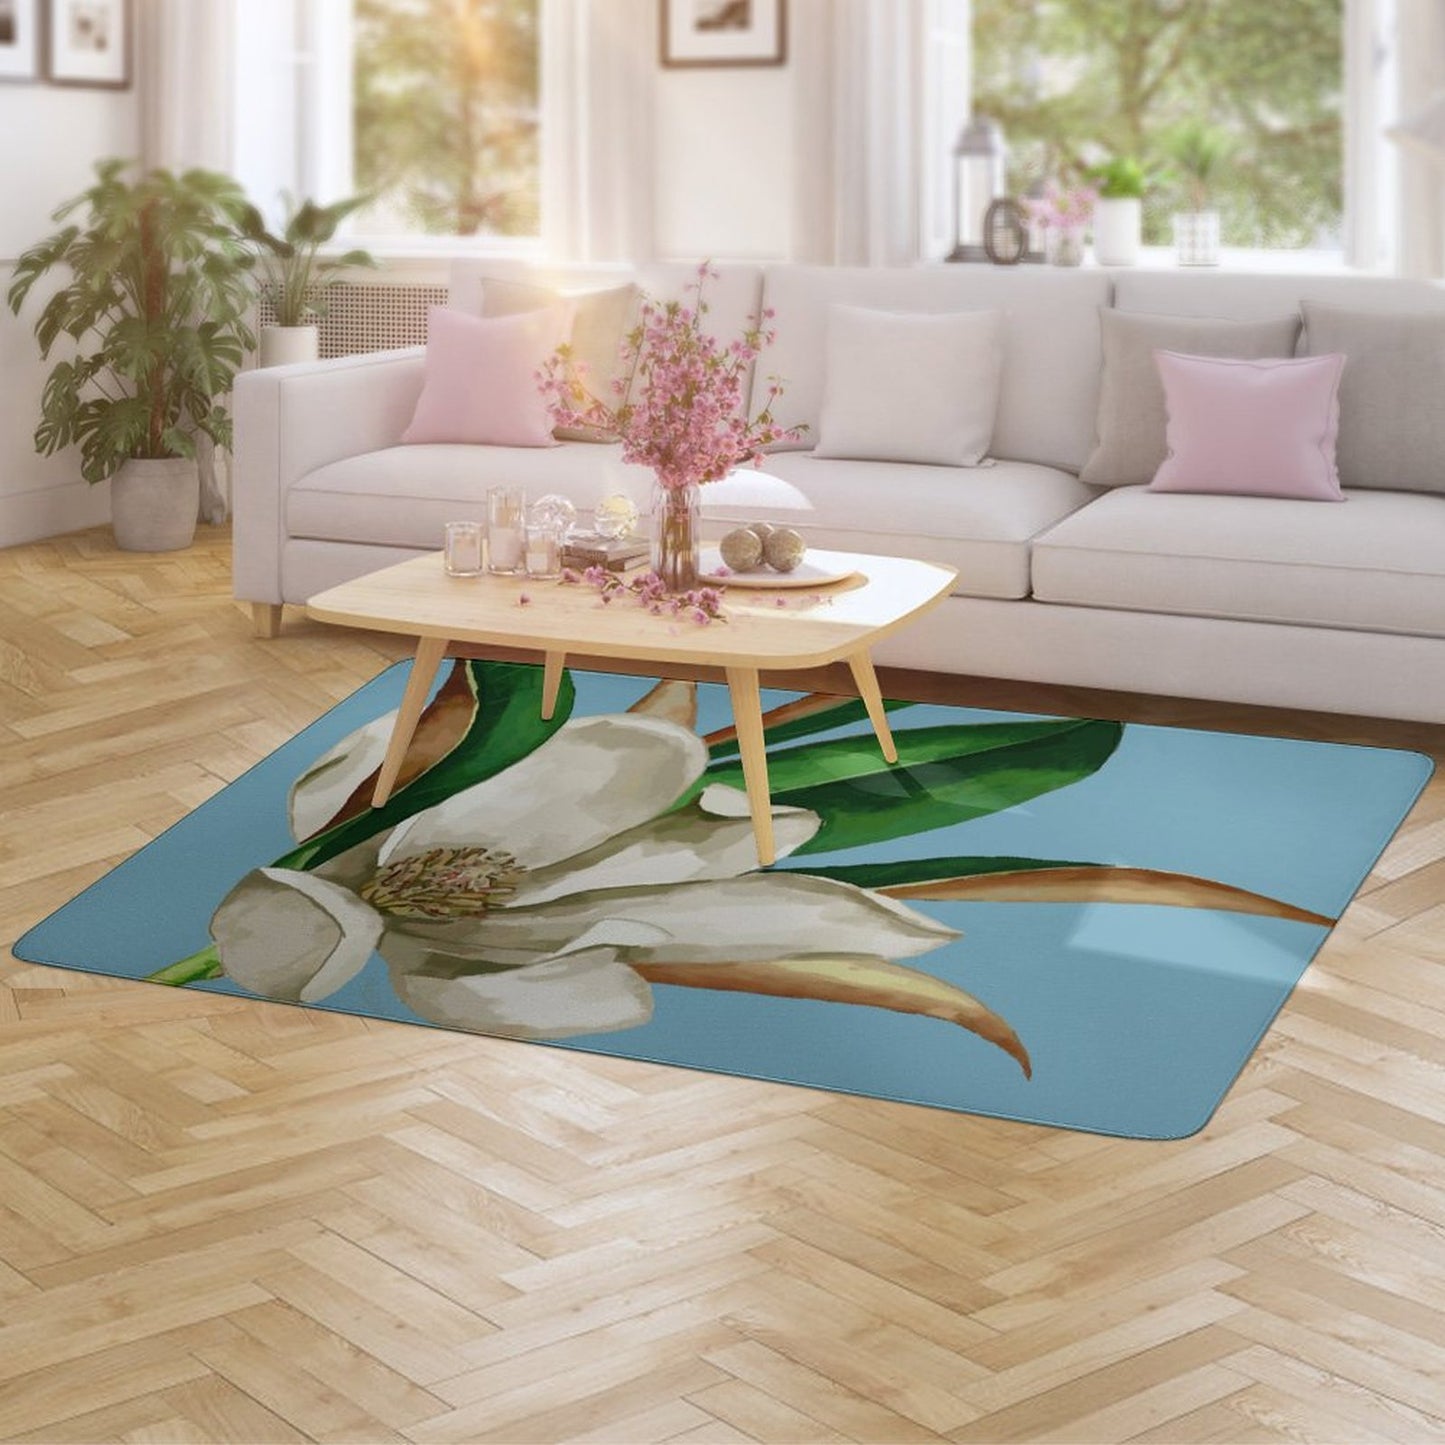 Magnolia Floor Mat for Home-60"x40"